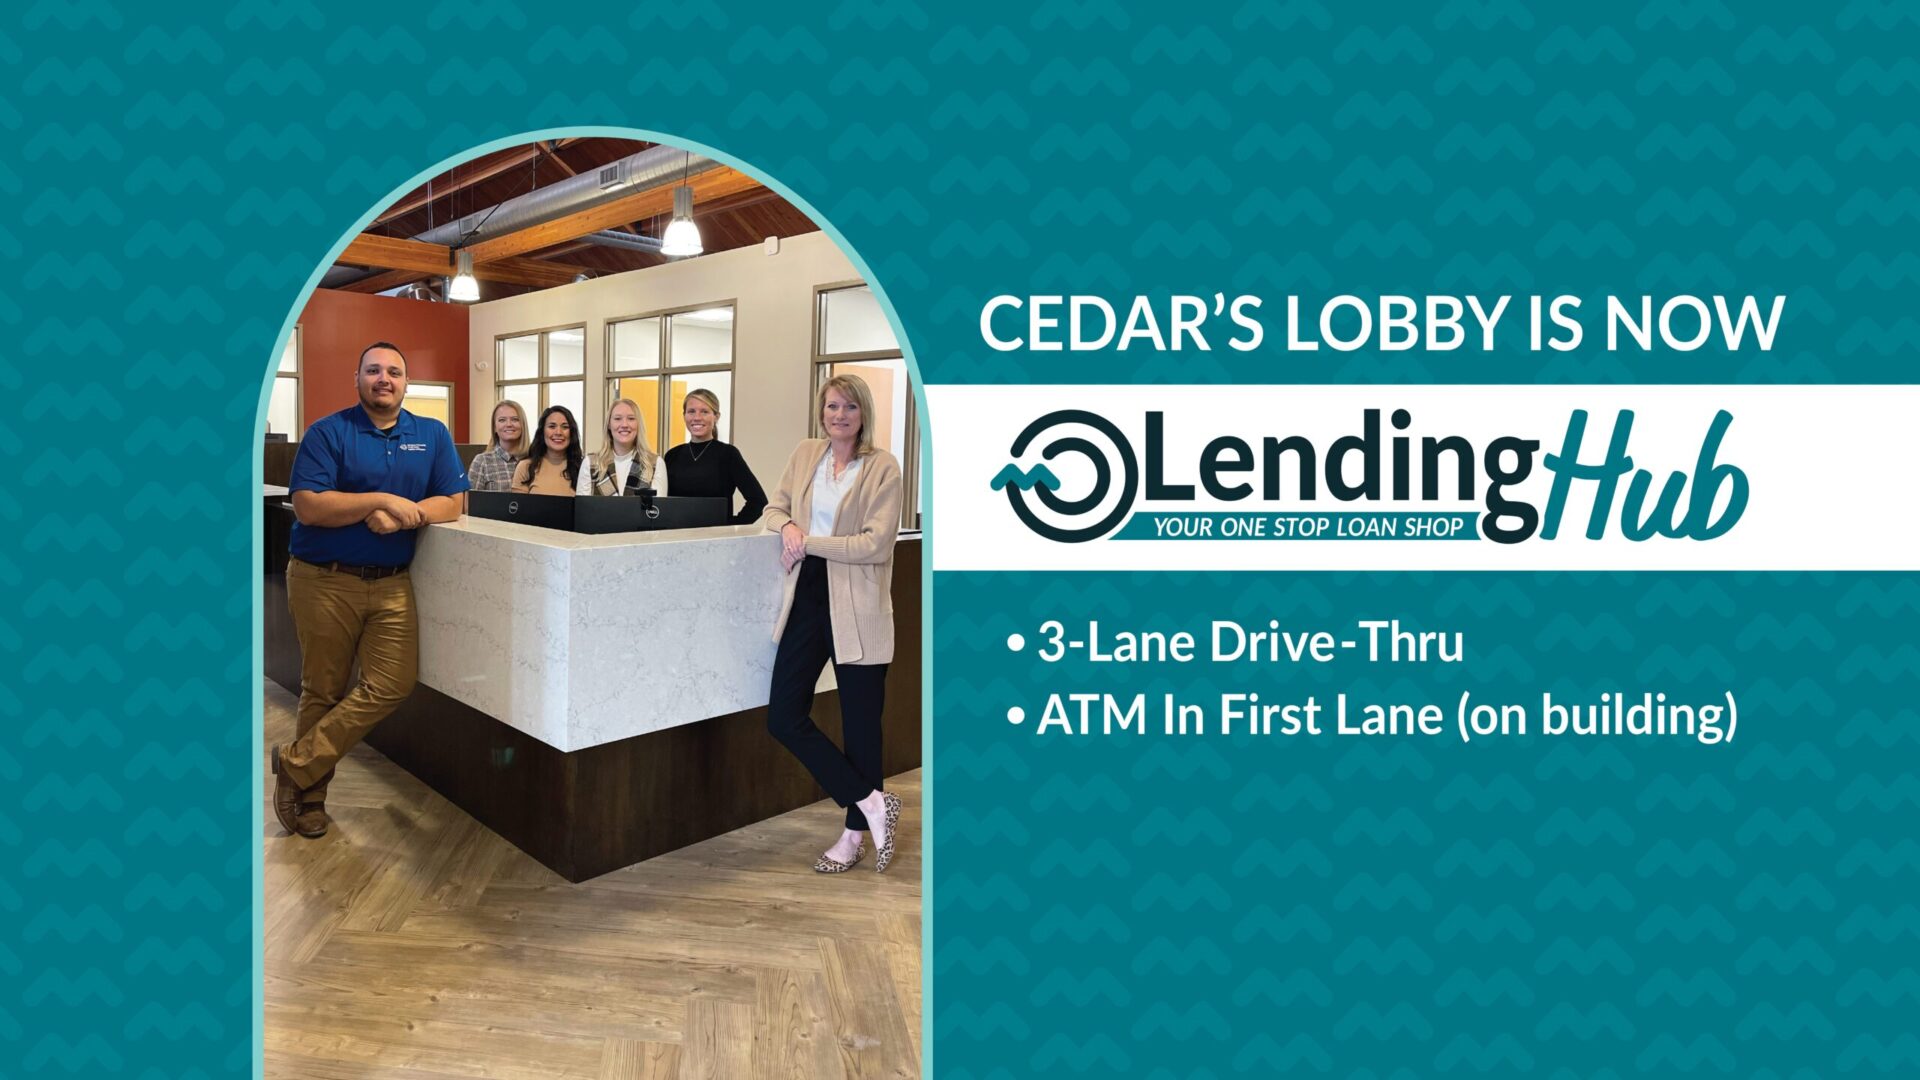 Cedar Street's lobby is now The Lending Hub with three lane drive thru for transactions.